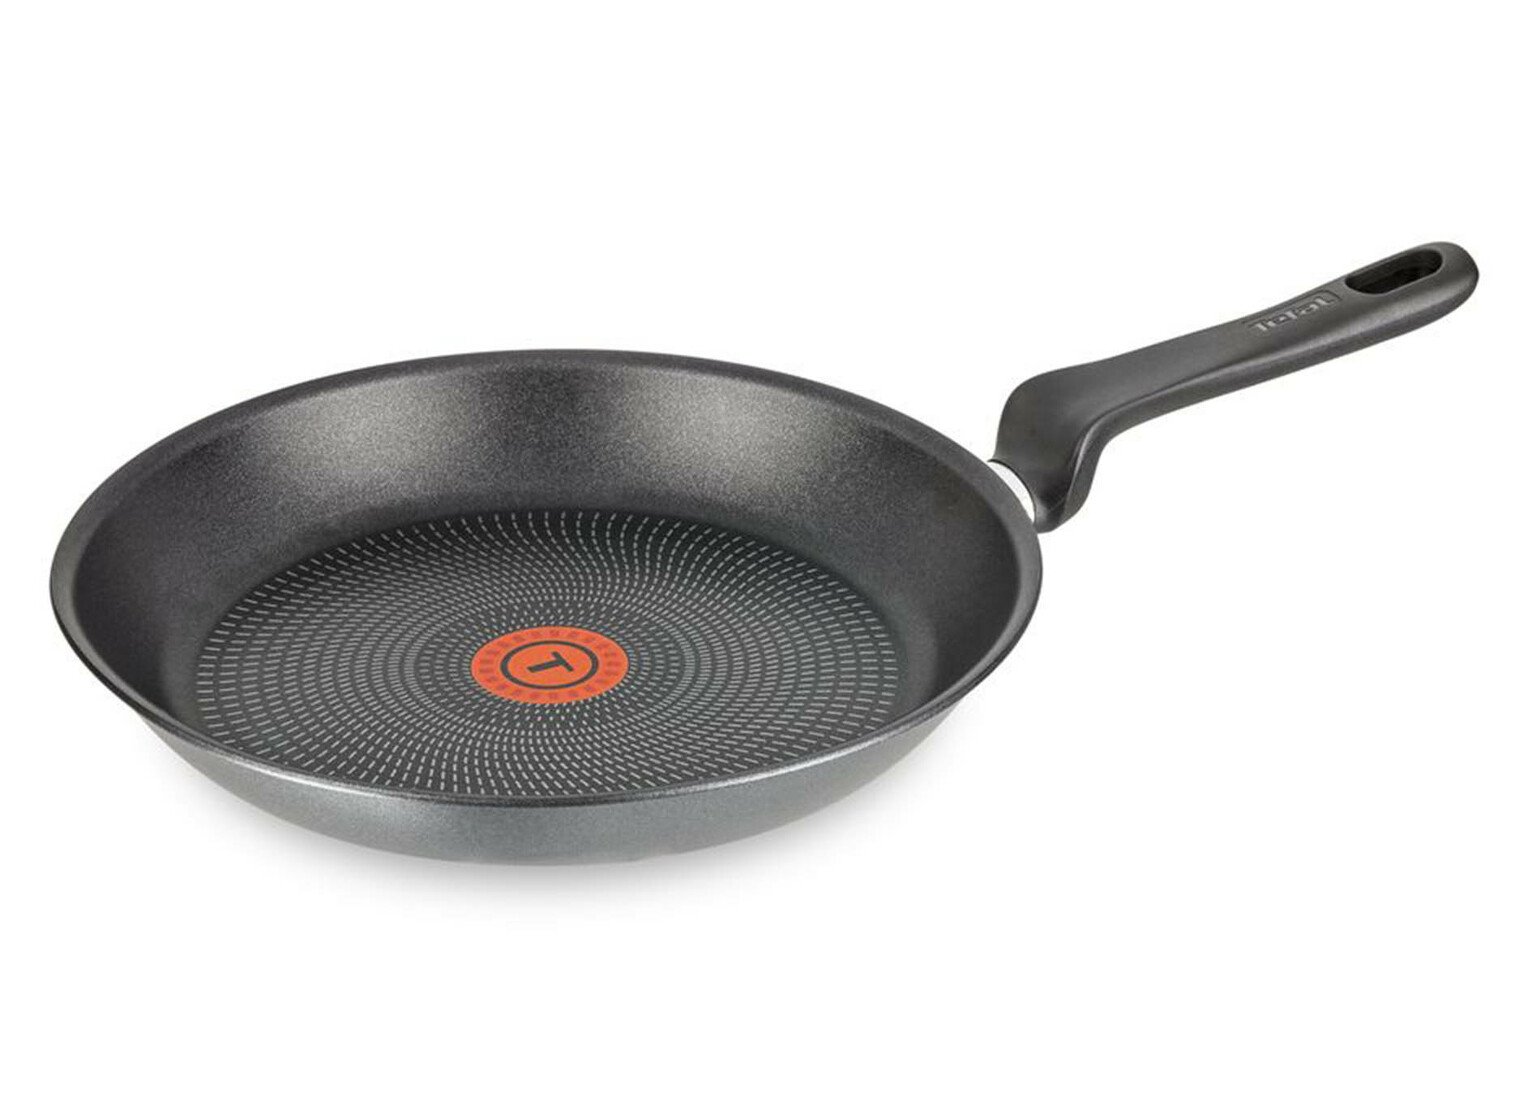 Tefal Simplissima 24cm Non-Stick Frying Pan